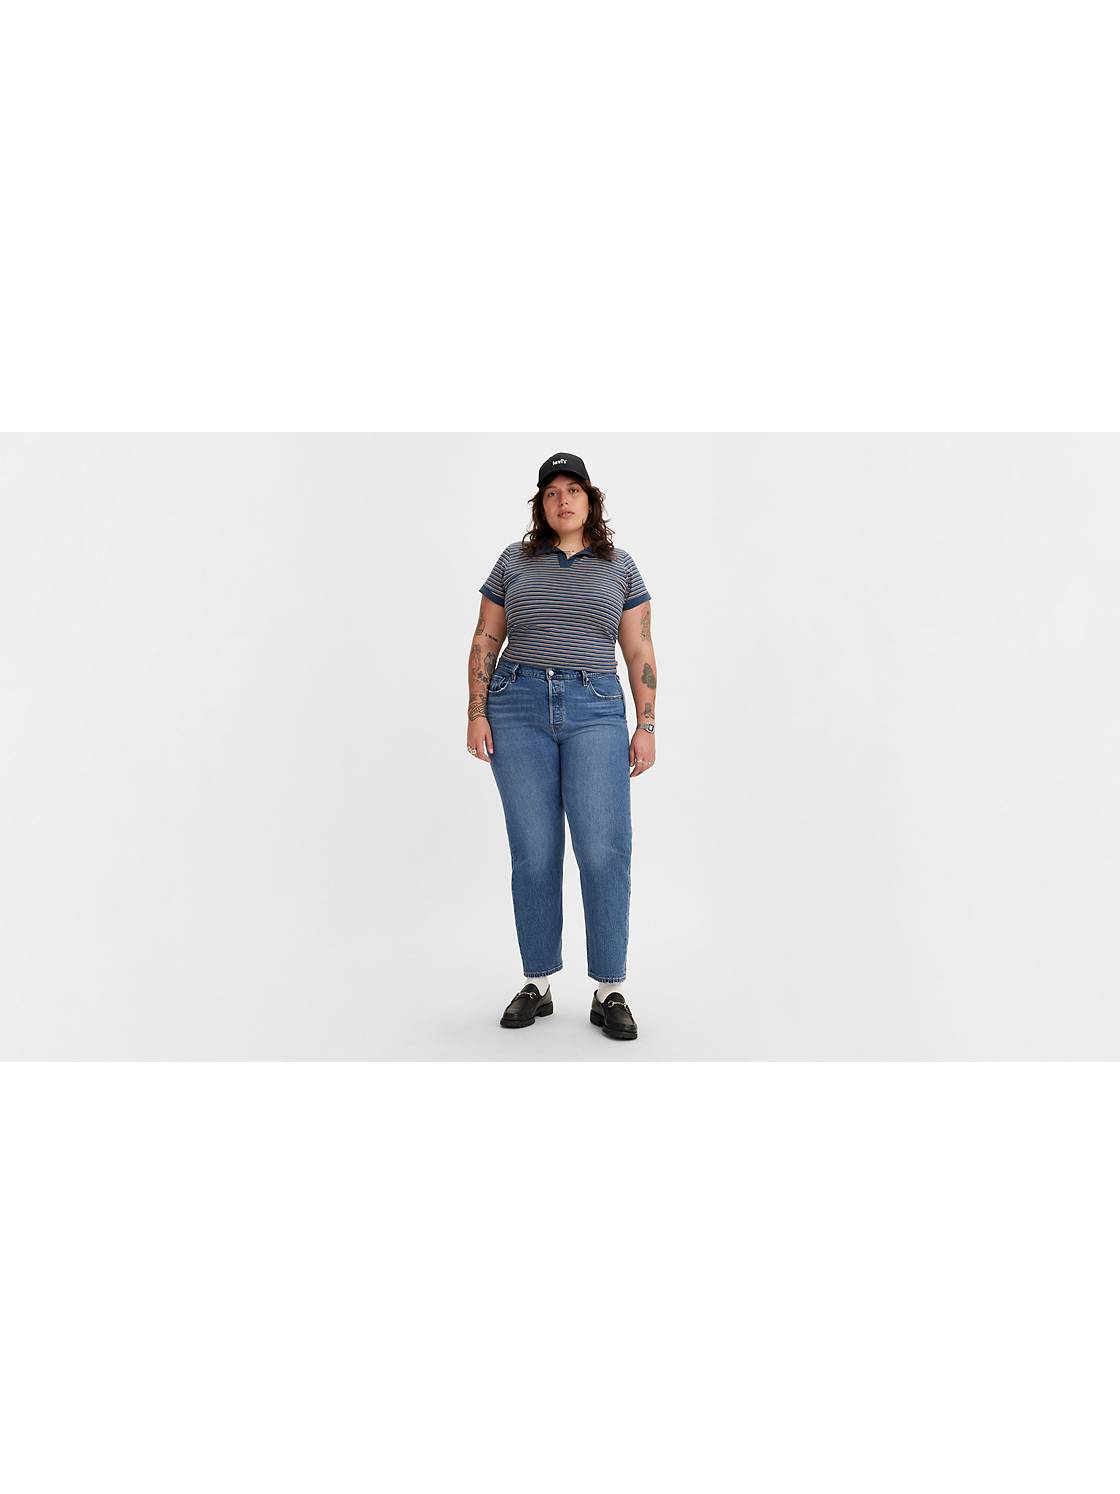 Plus Size Jeans For Women - Buy Plus Size Jeans For Women online